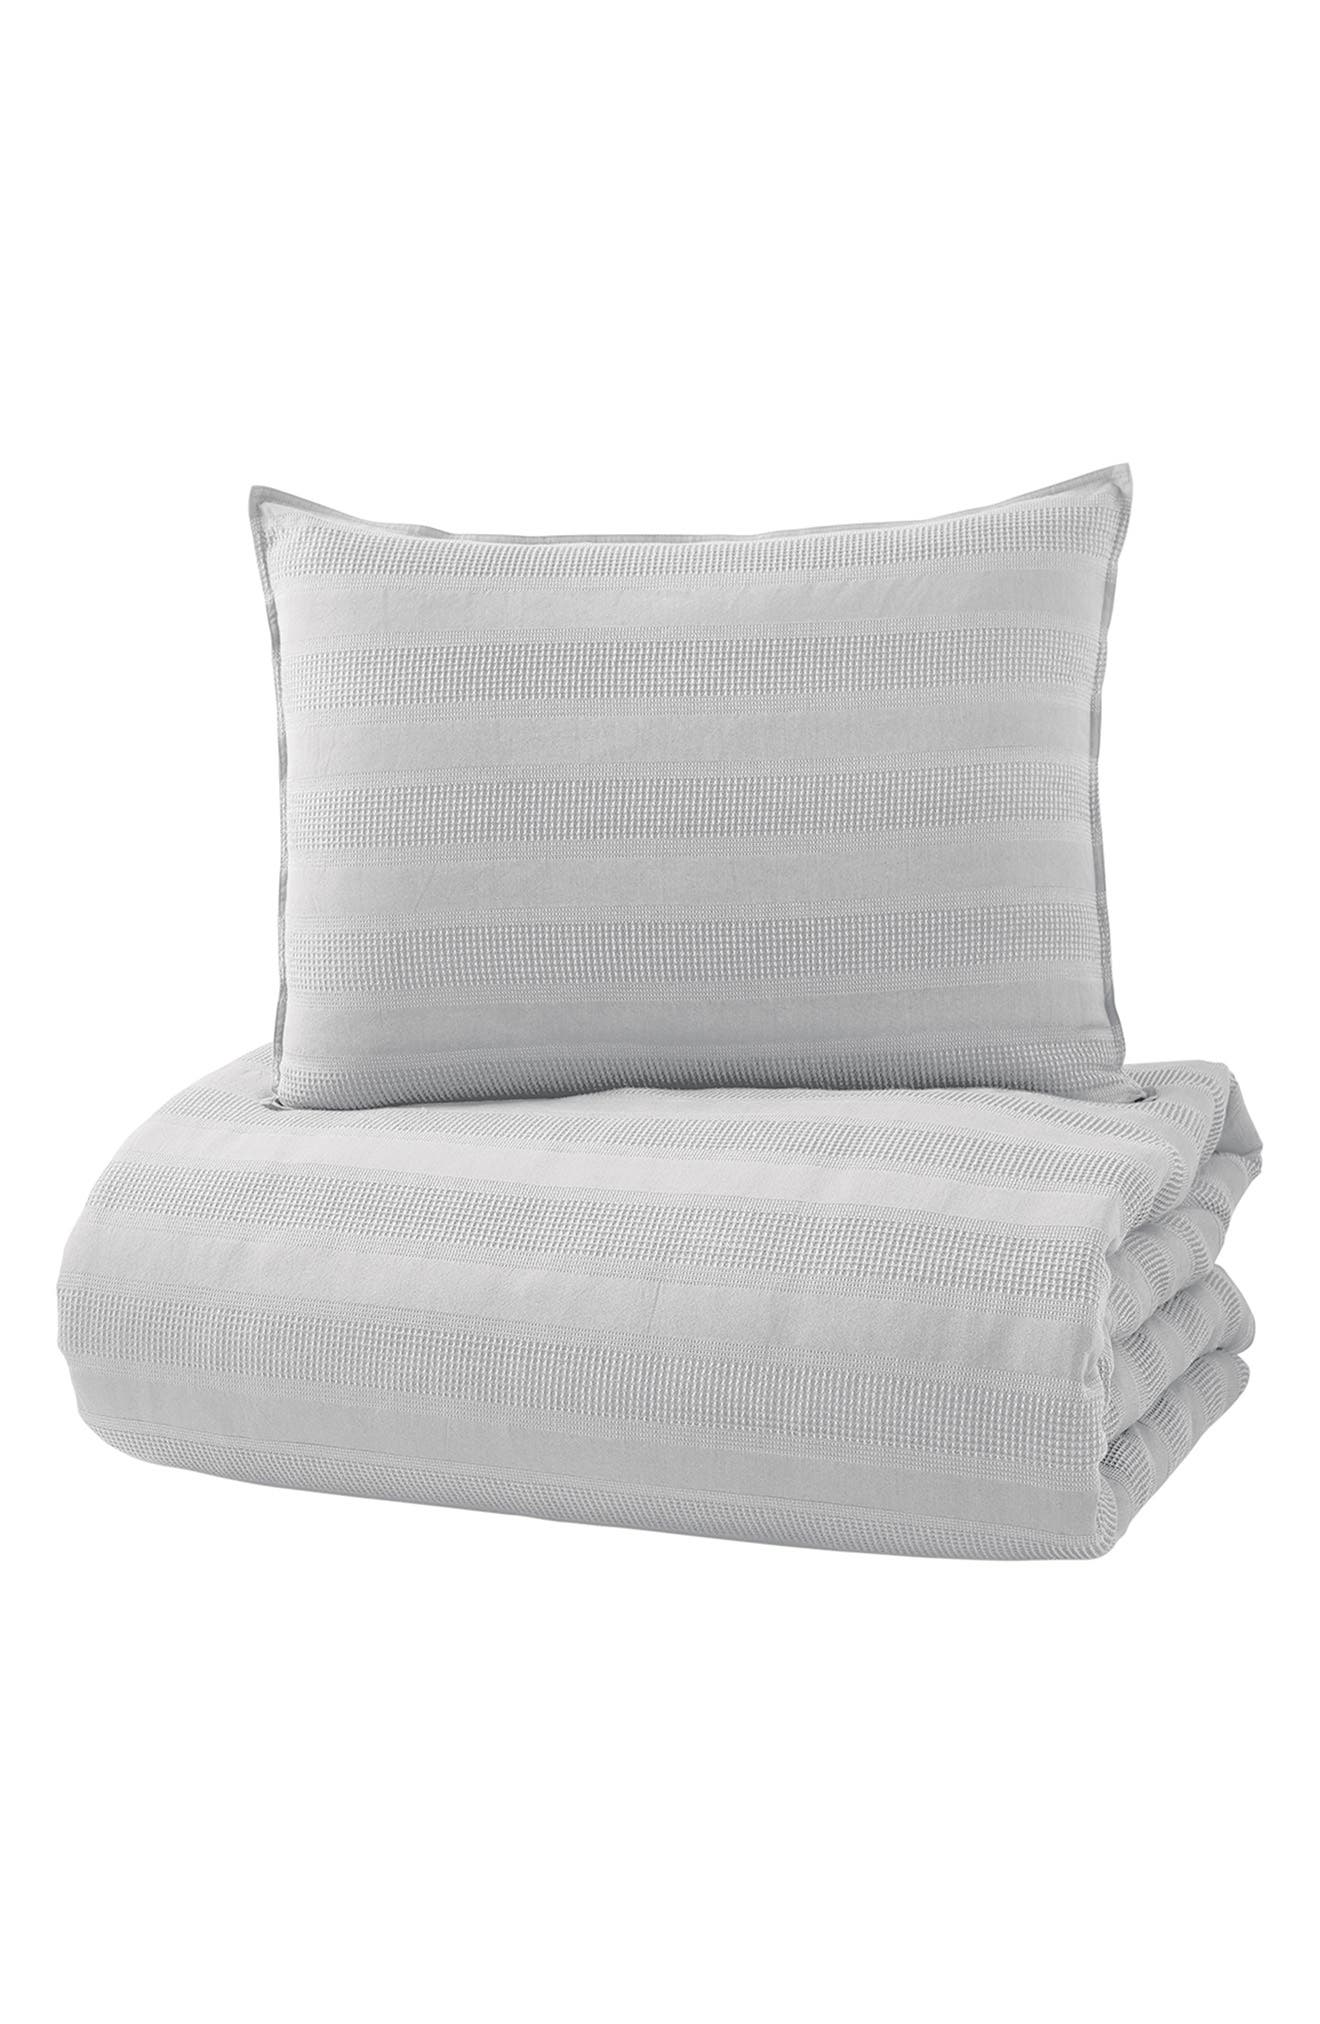 DKNY Avenue Stripe Cotton Comforter & Sham Set in Grey at Nordstrom, Size Full